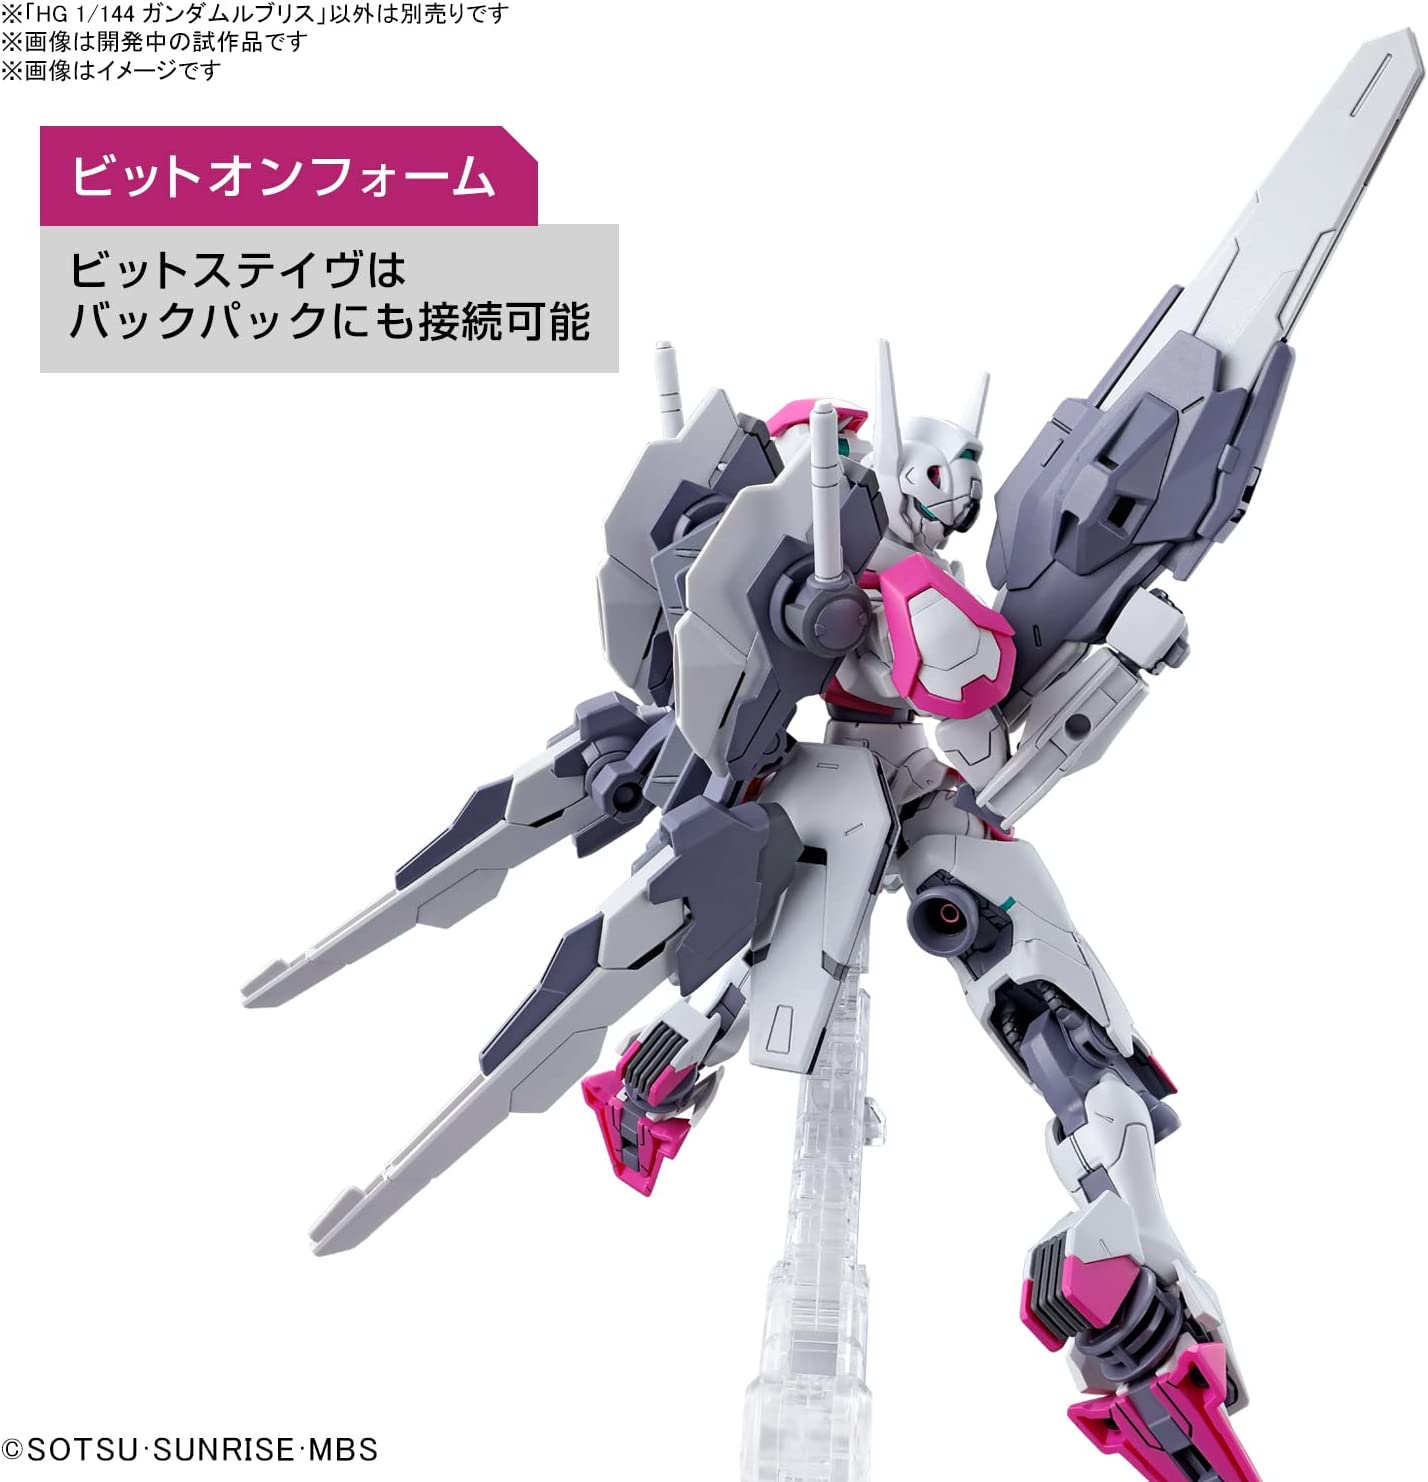 #01 Gundam LFRITH "The Witch from Mercury", Bandai Spirits Hobby HG 1/144 Model Kit